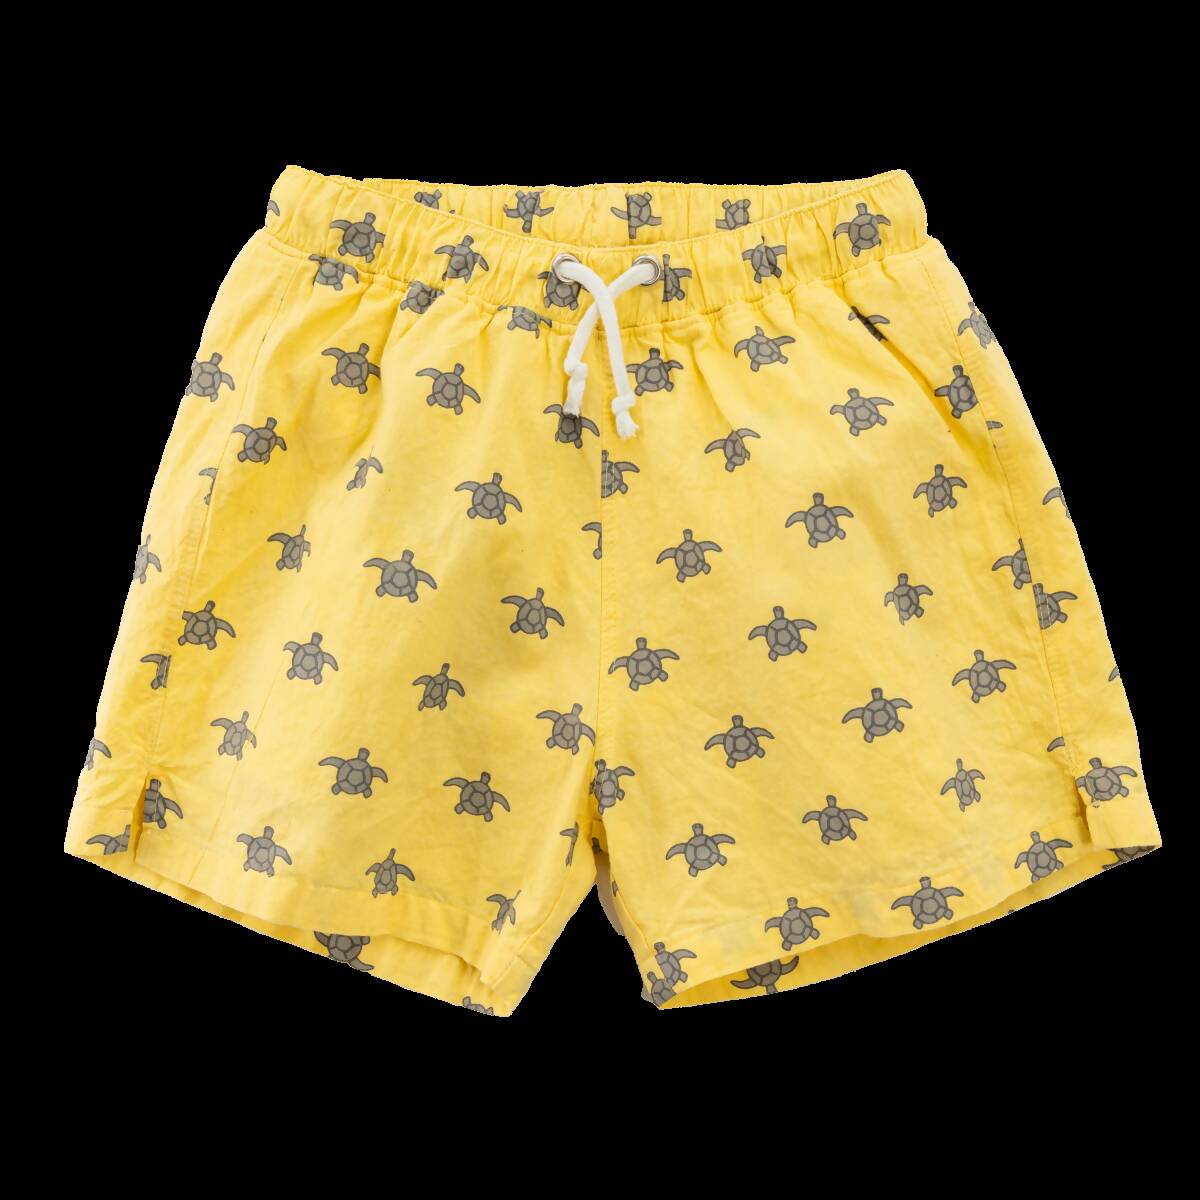 yellow-swim-shorts-front-1200x1200